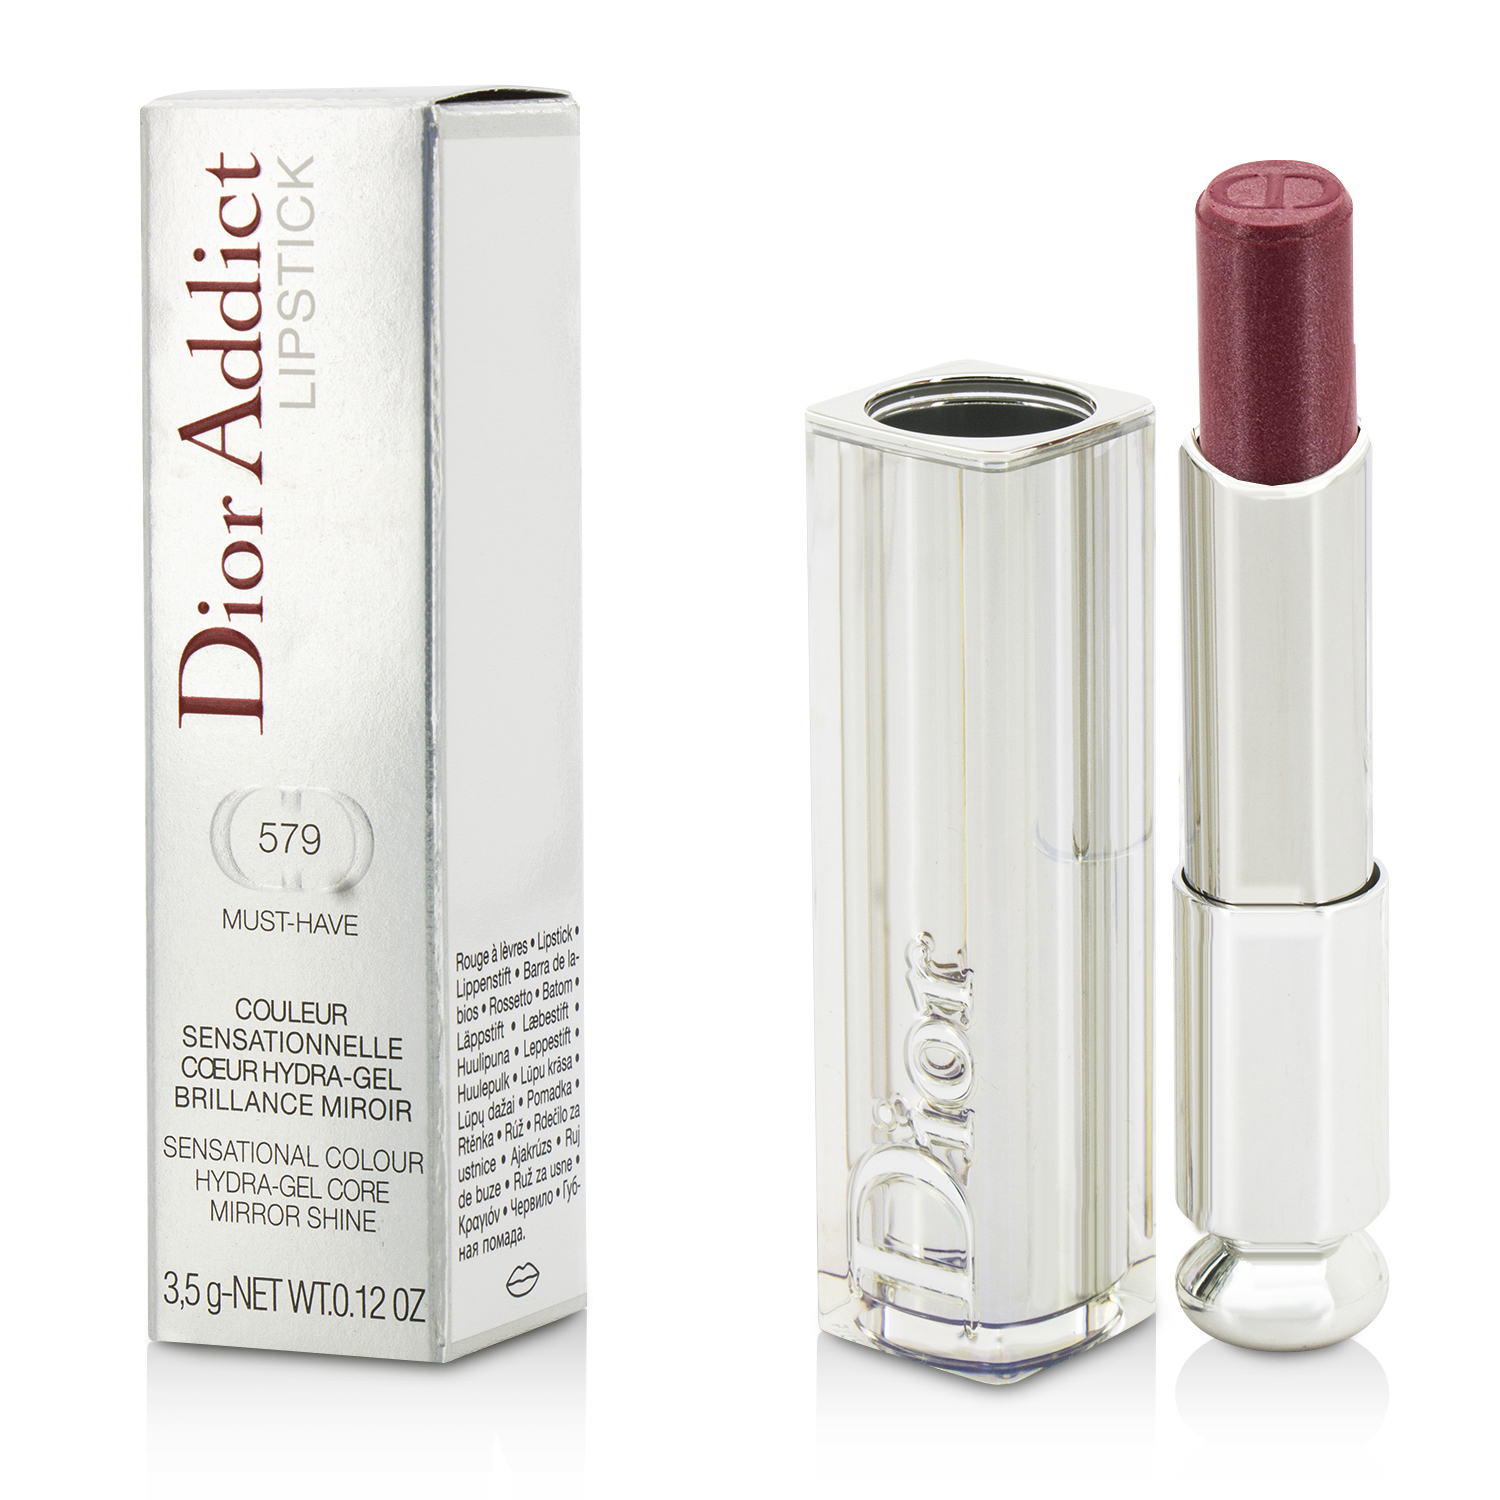 Dior Addict Hydra Gel Core Mirror Shine Lipstick - #579 Must Have Christian Dior Image